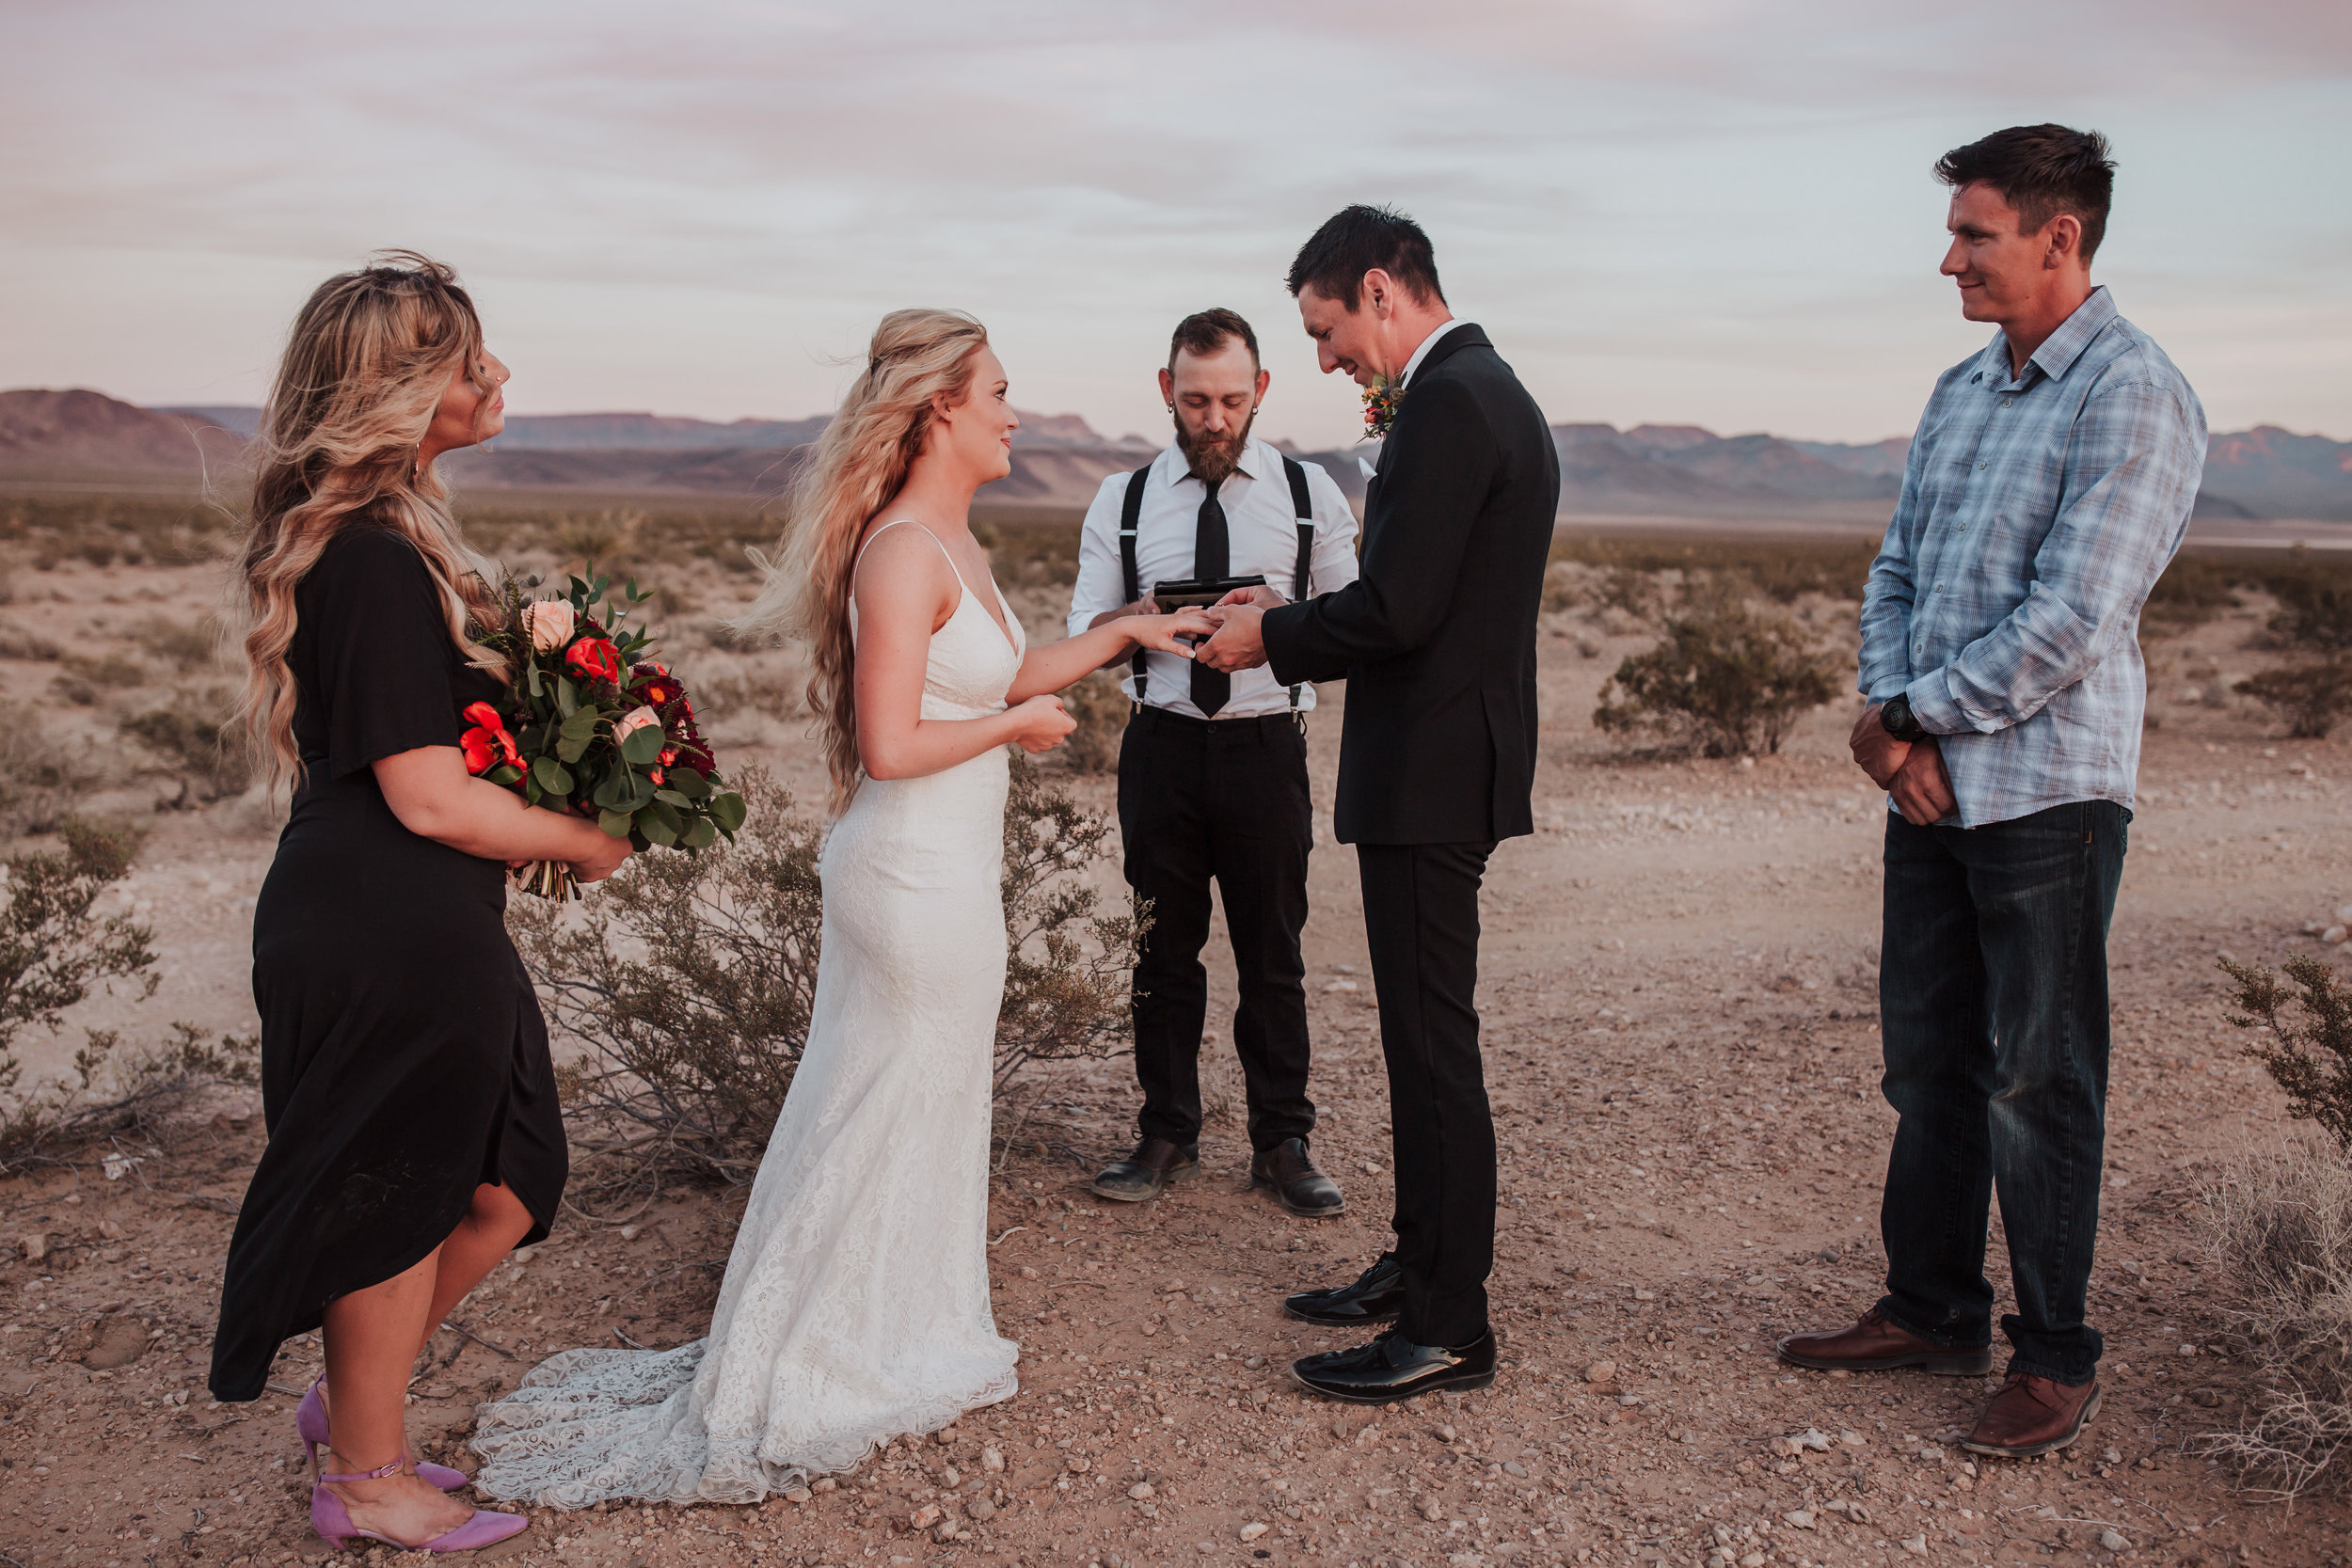 Rustic Bloom Photography | Las Vegas Desert Elopement Inspiration 